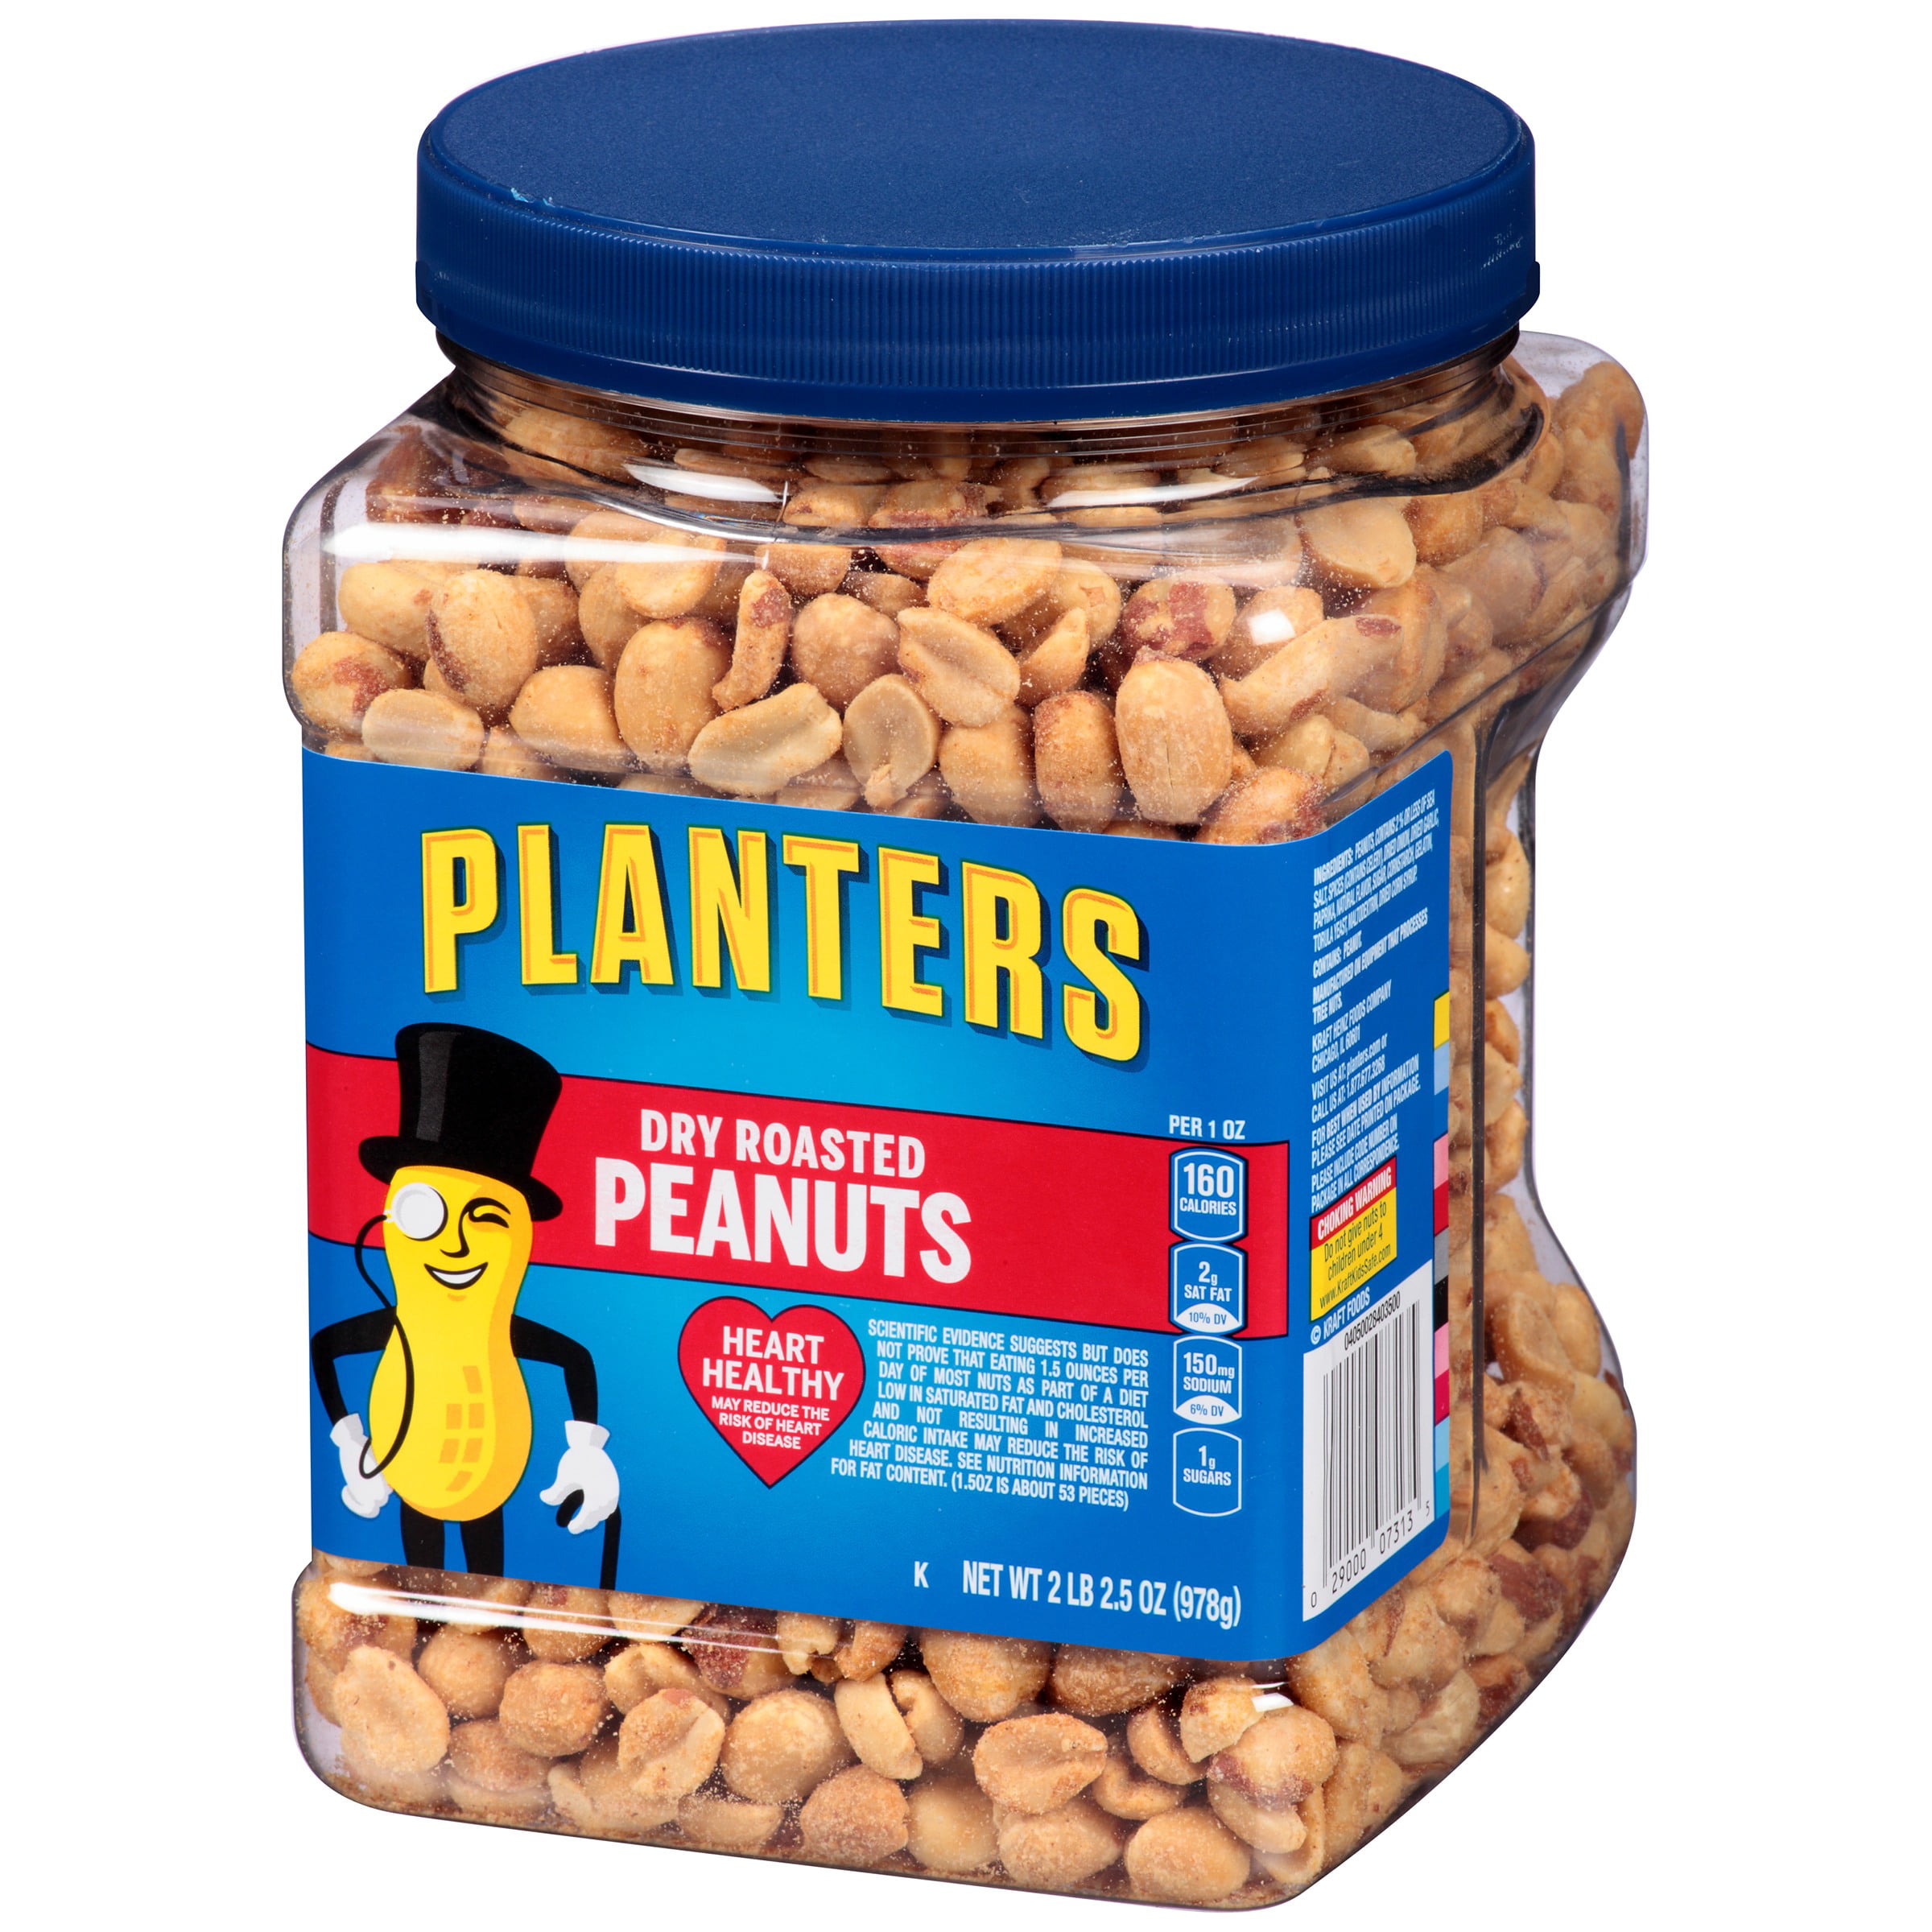 calories in dry roasted peanuts | Diydrywalls.org